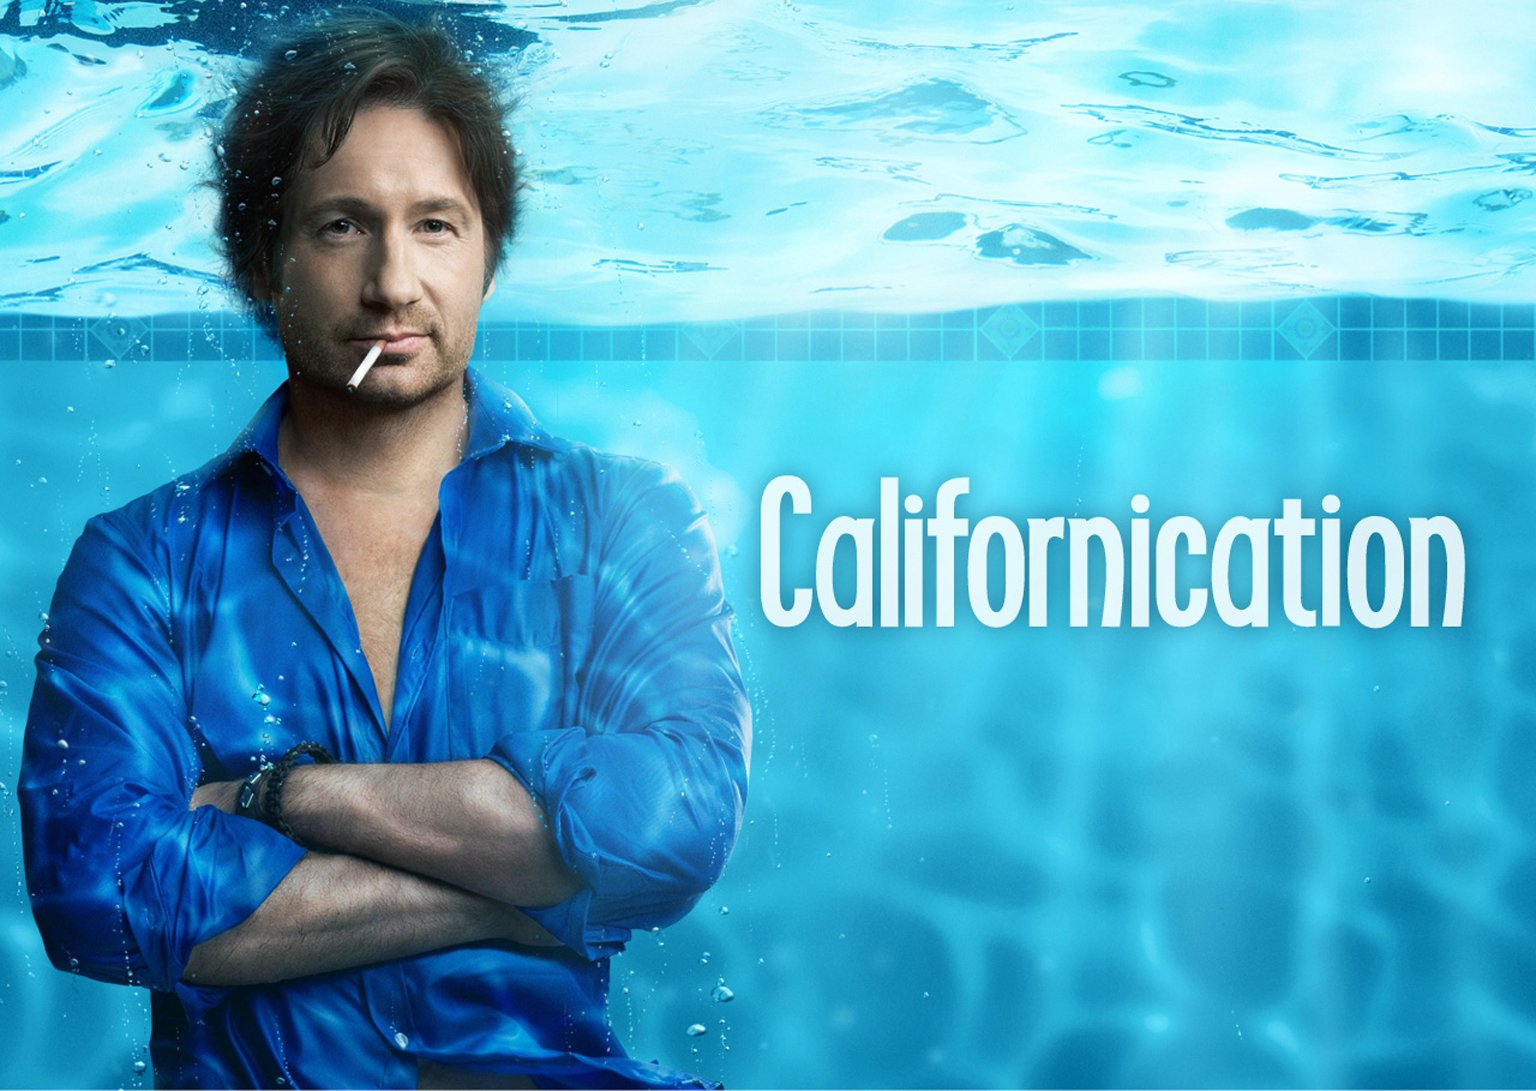 Californication HD Wallpaper Background Image